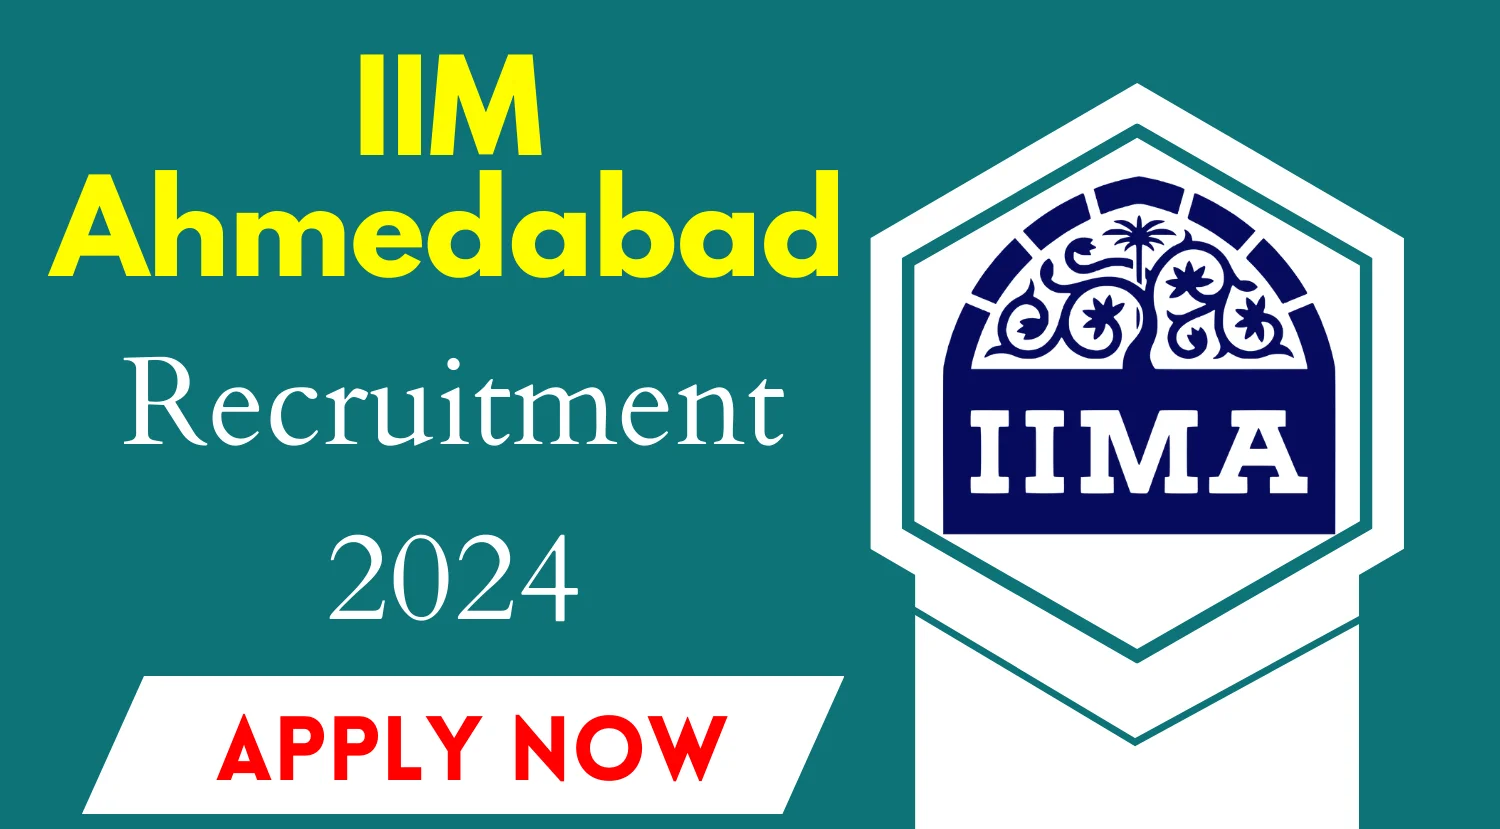 IIM Ahmedabad Research Associate Recruitment 2024